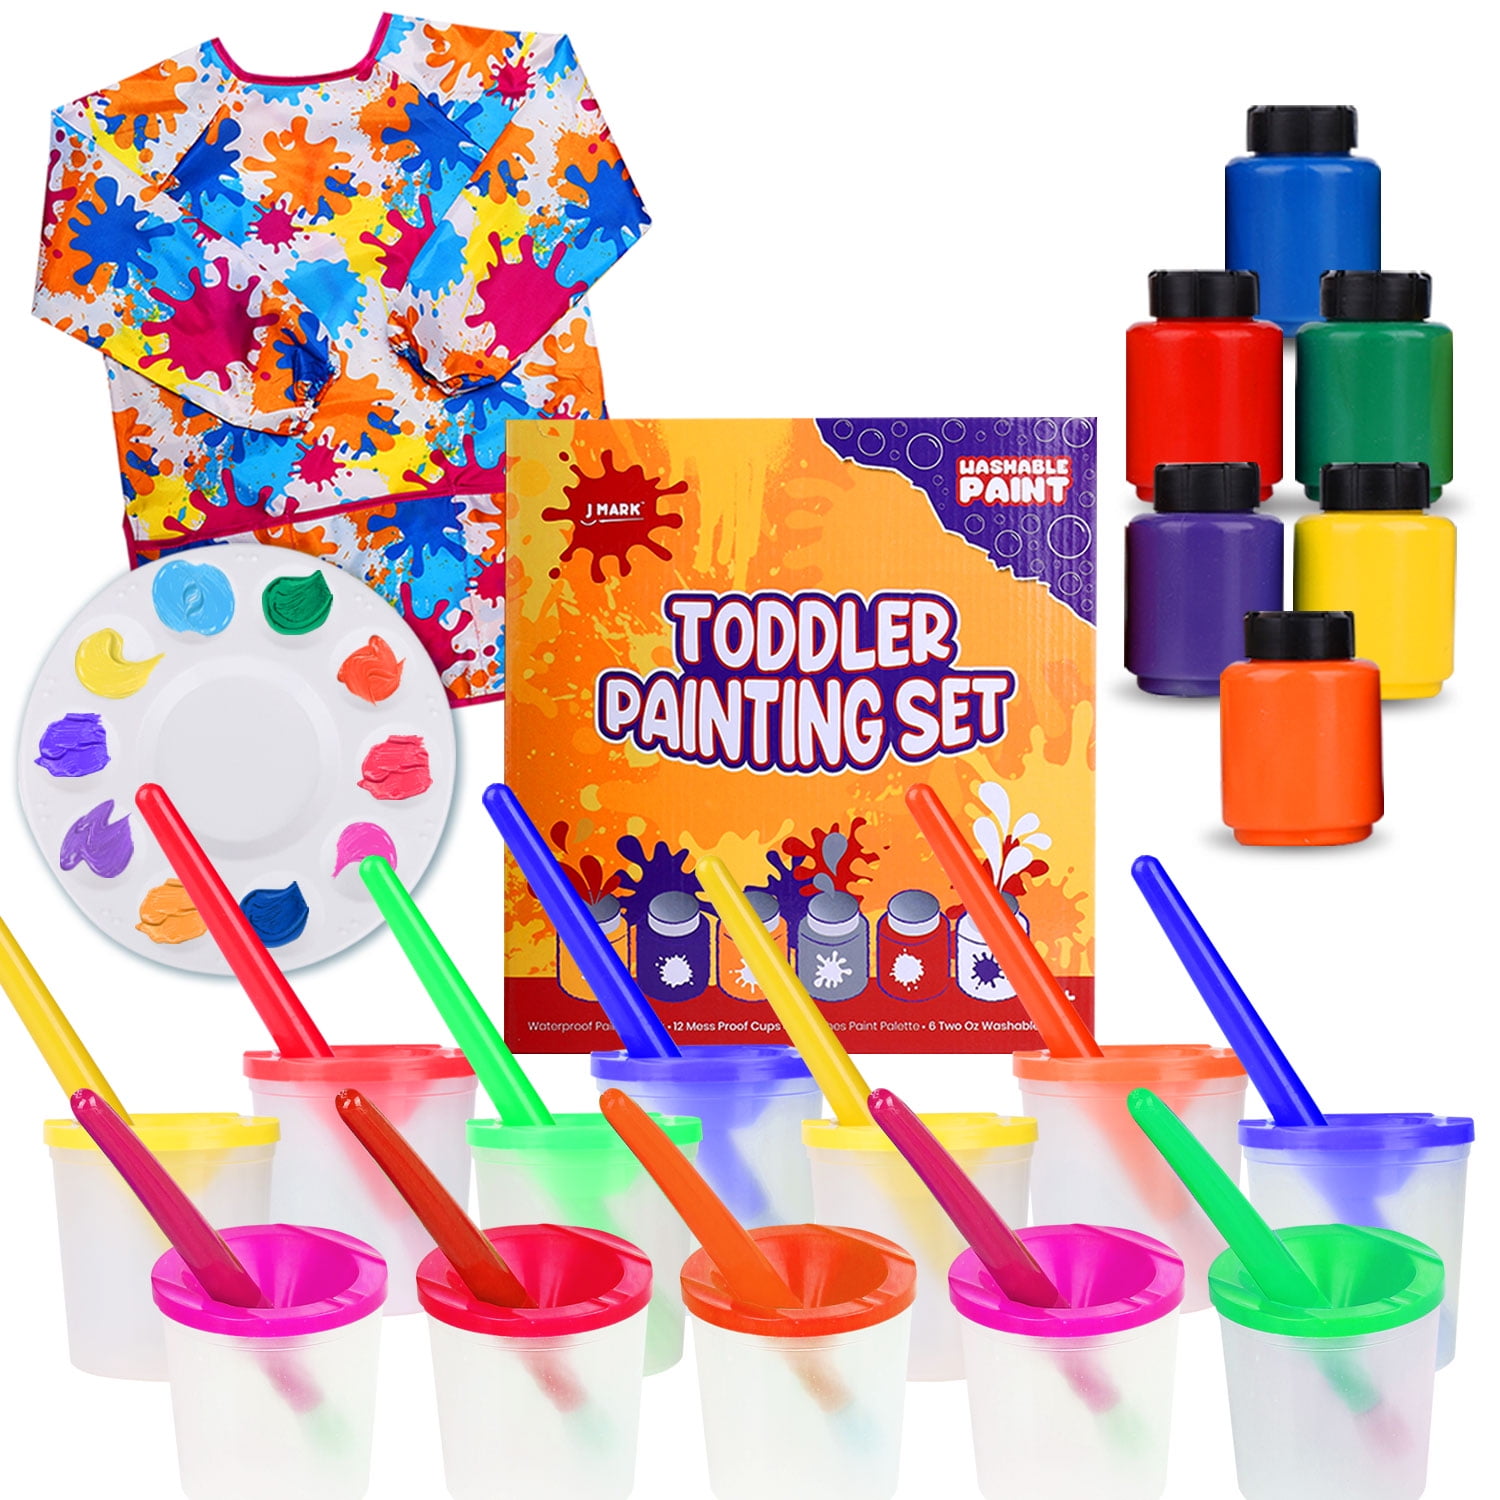 Washable Kids Paint 6 Count, 7 Paint Brushes, Paint Palette - Washable  Paint Set For Kids Craft Projects, Finger Painting Supplies Kit